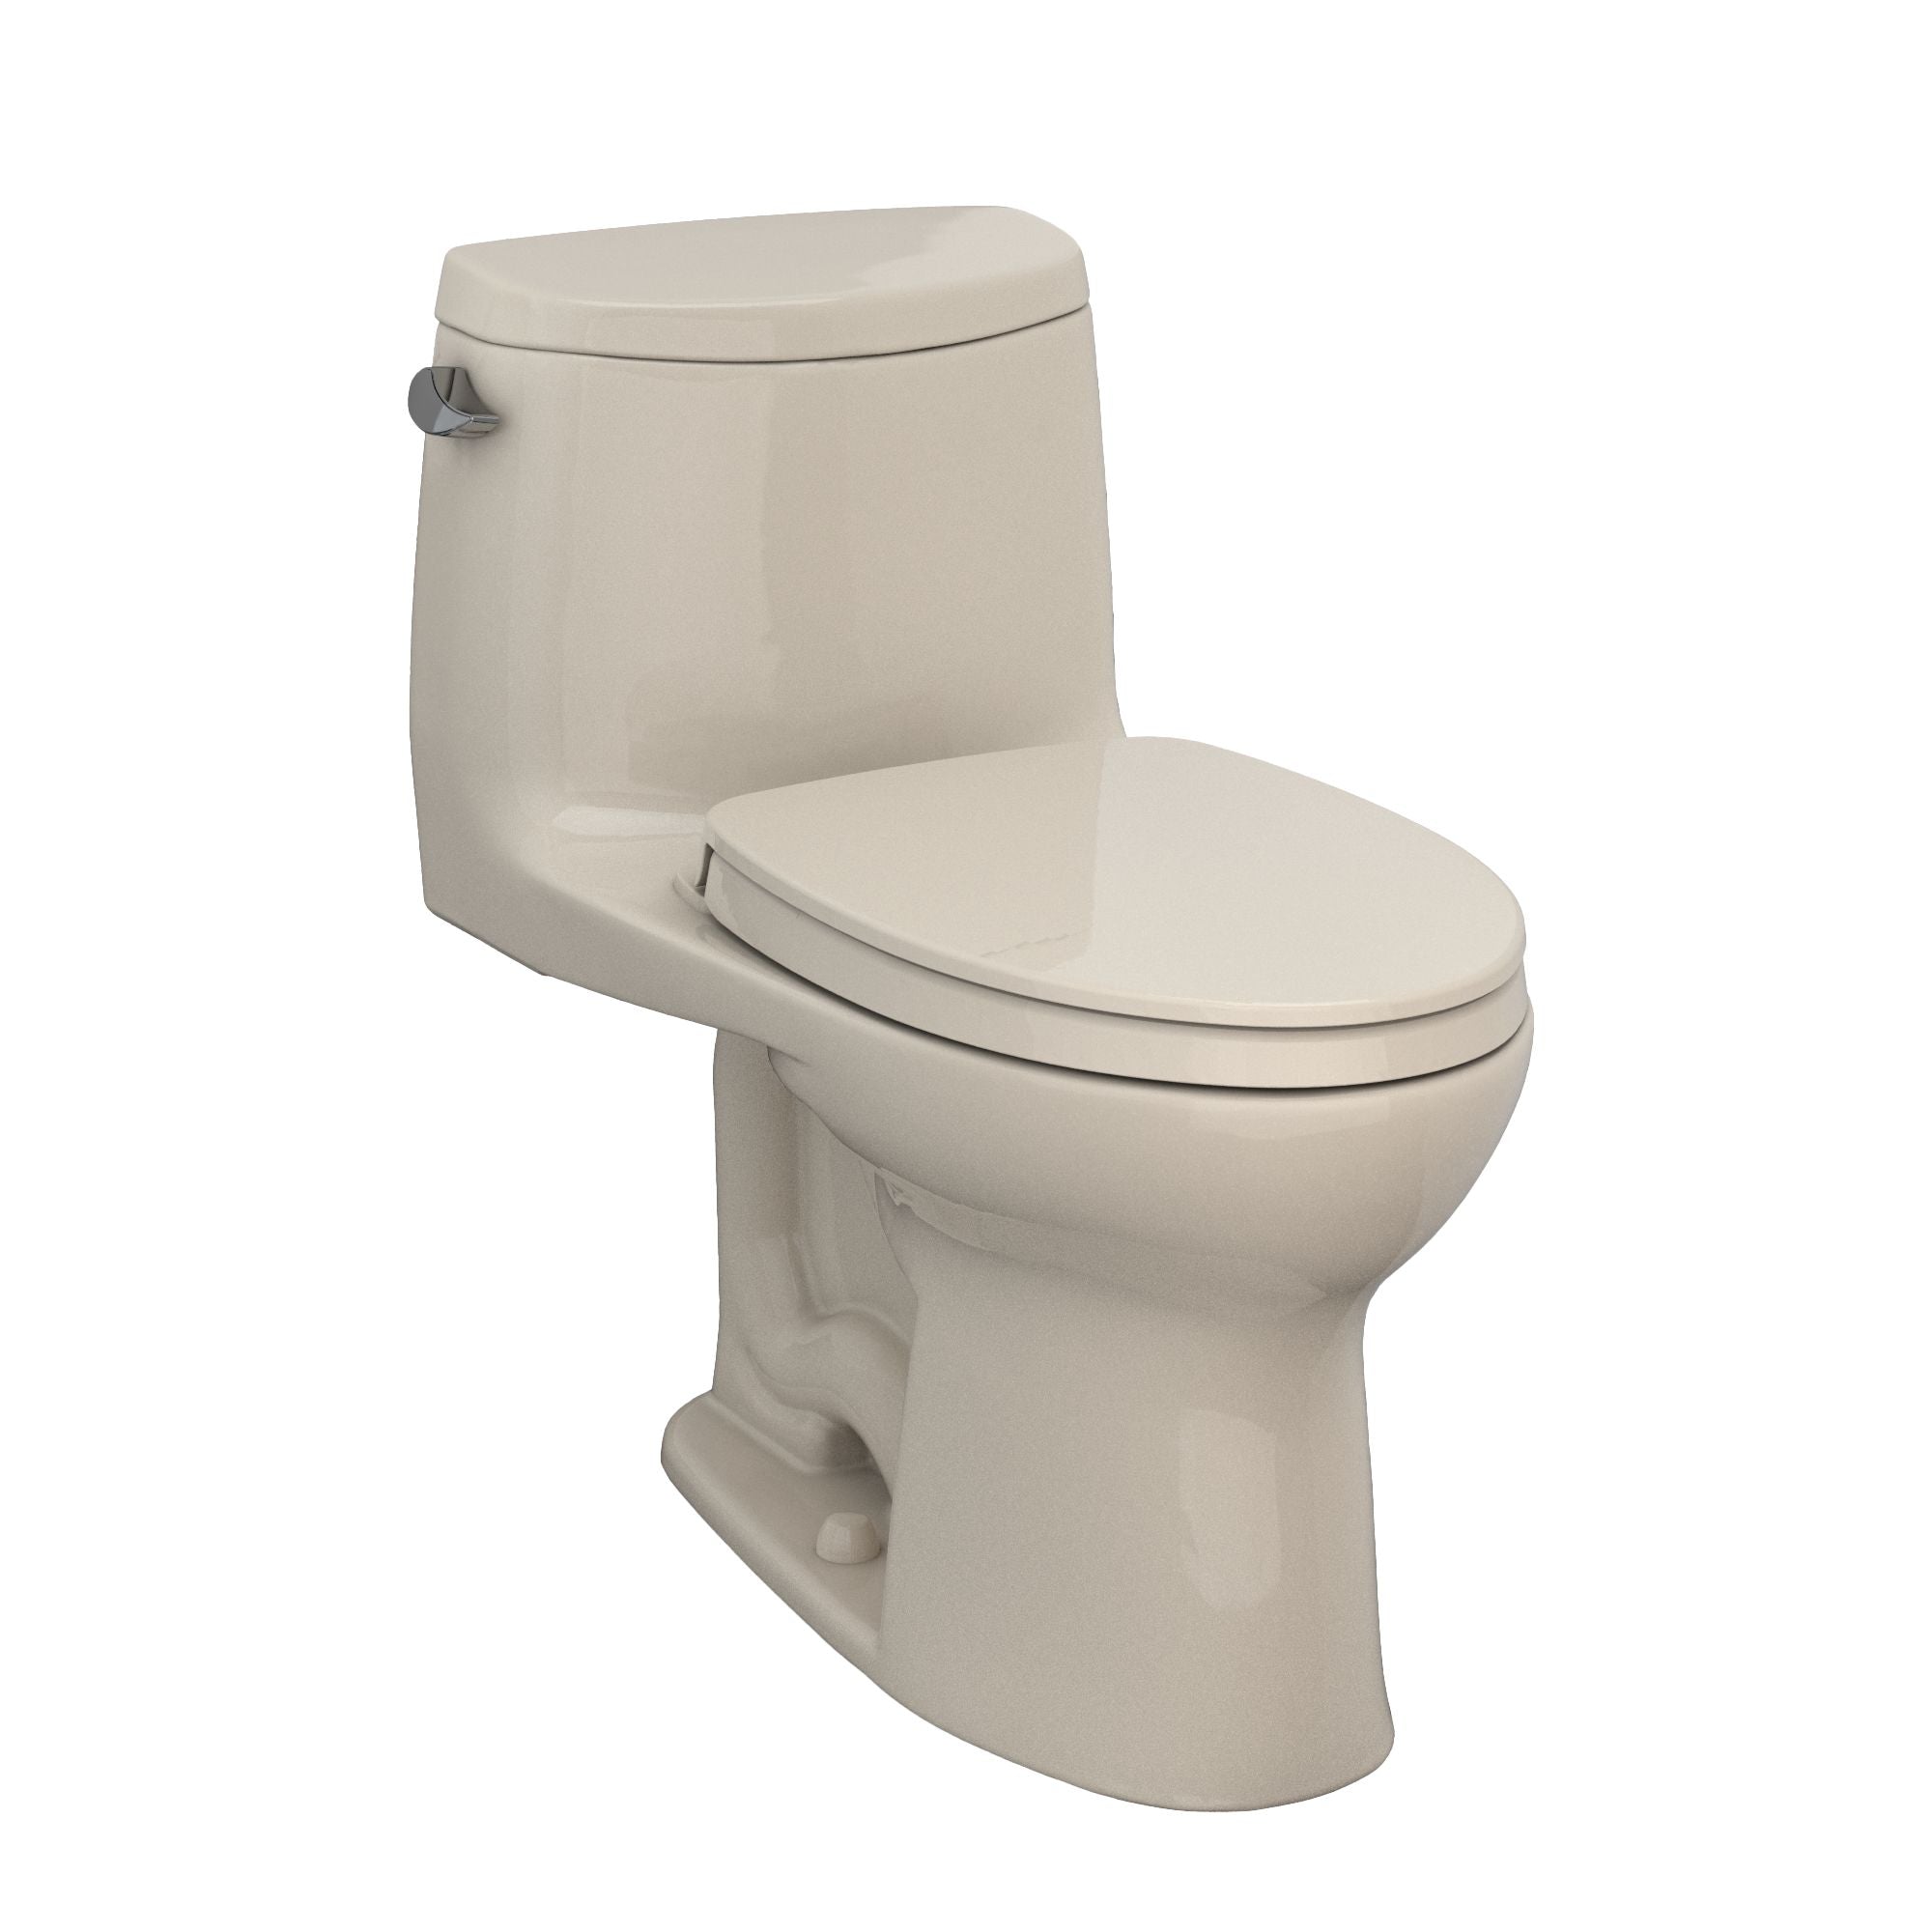 Toto Ultramax II One-piece Toilet 1.28 GPF